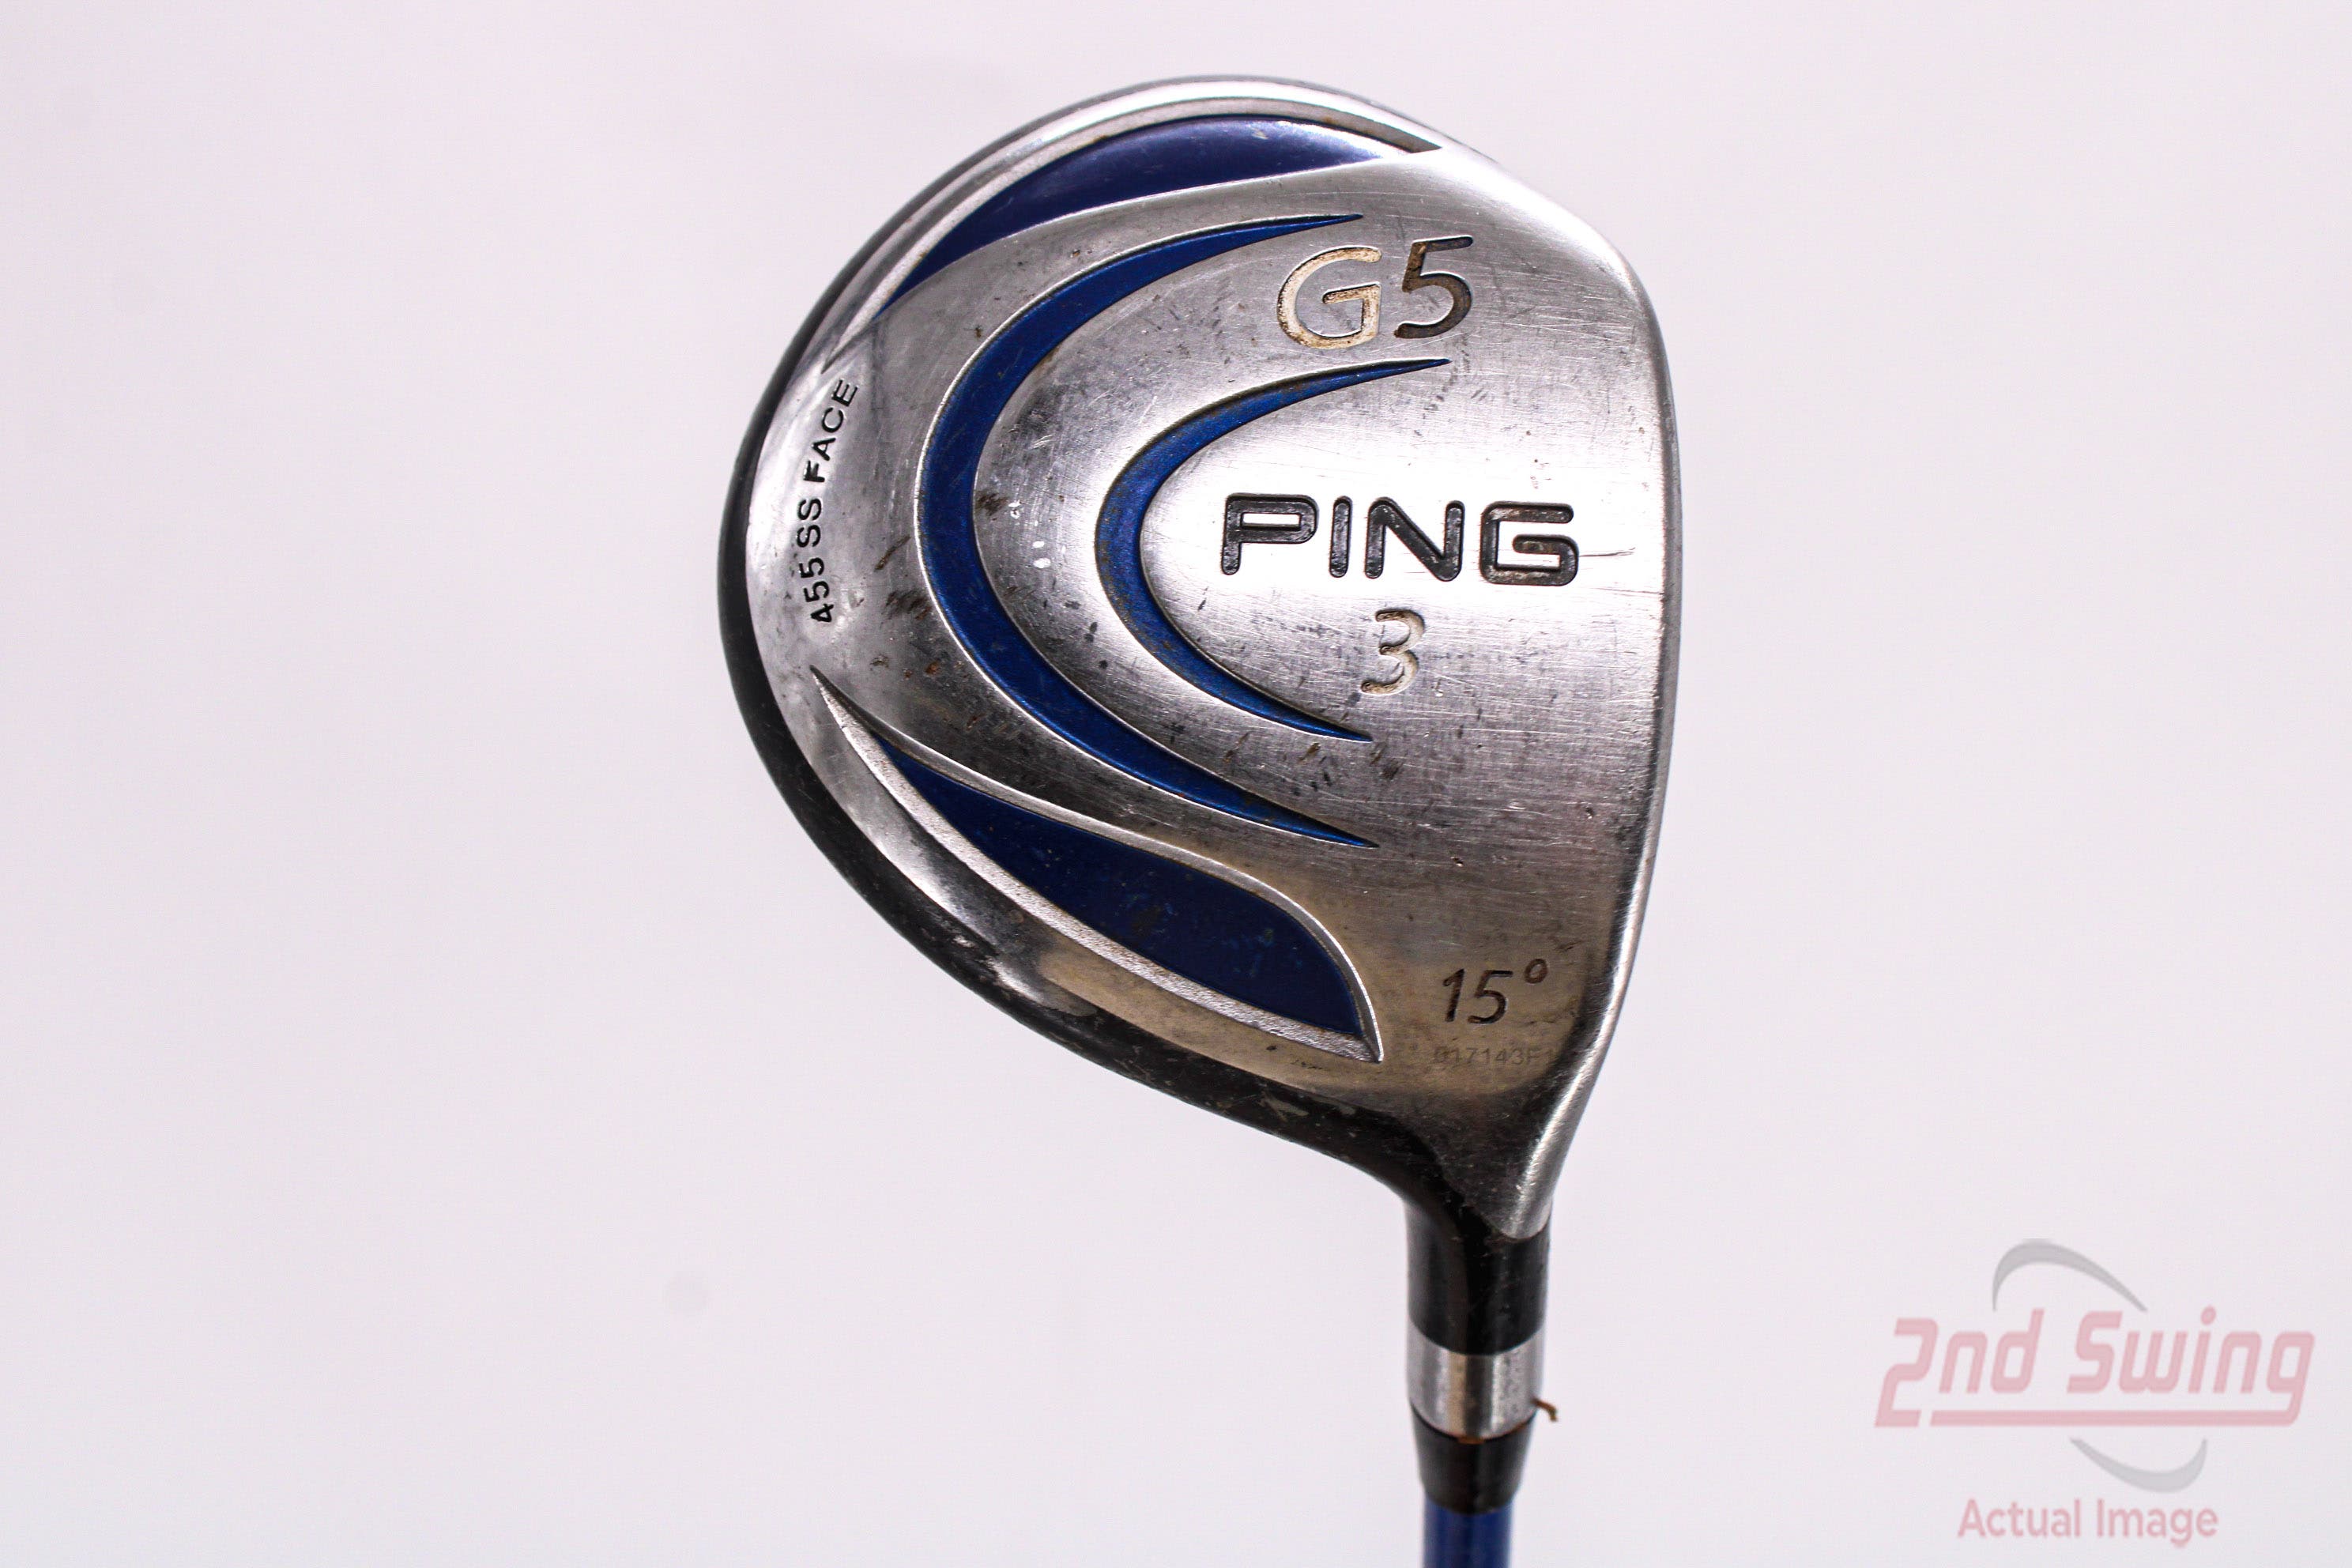 Ping G5 Fairway Wood | 2nd Swing Golf